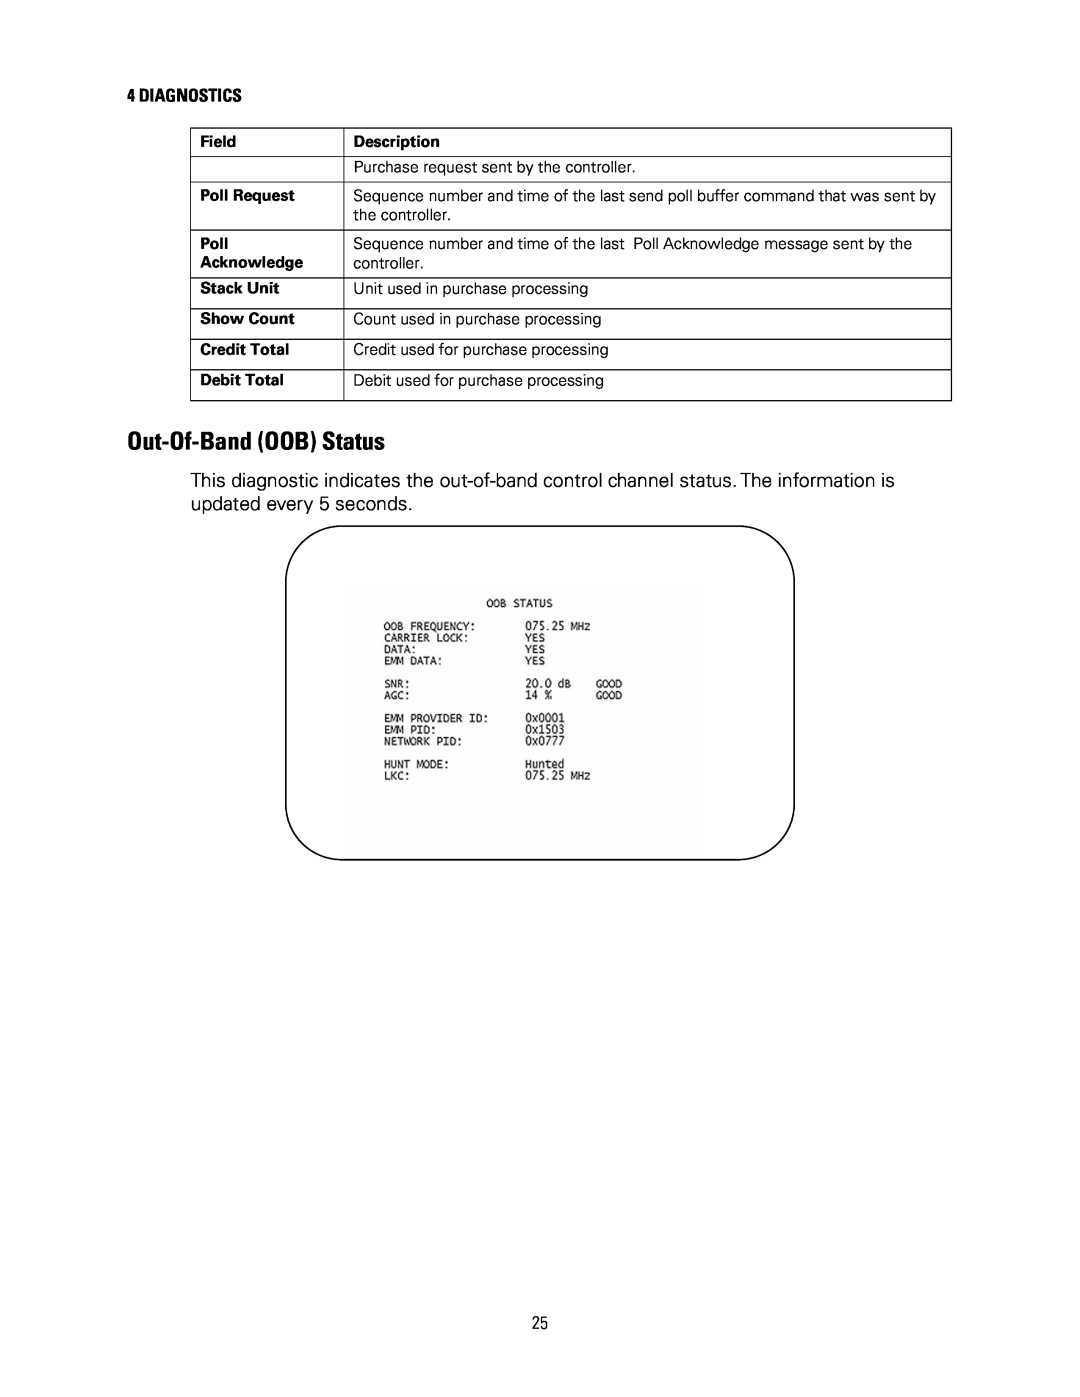 Motorola DCH3200 installation manual Out-Of-BandOOB Status, Diagnostics 